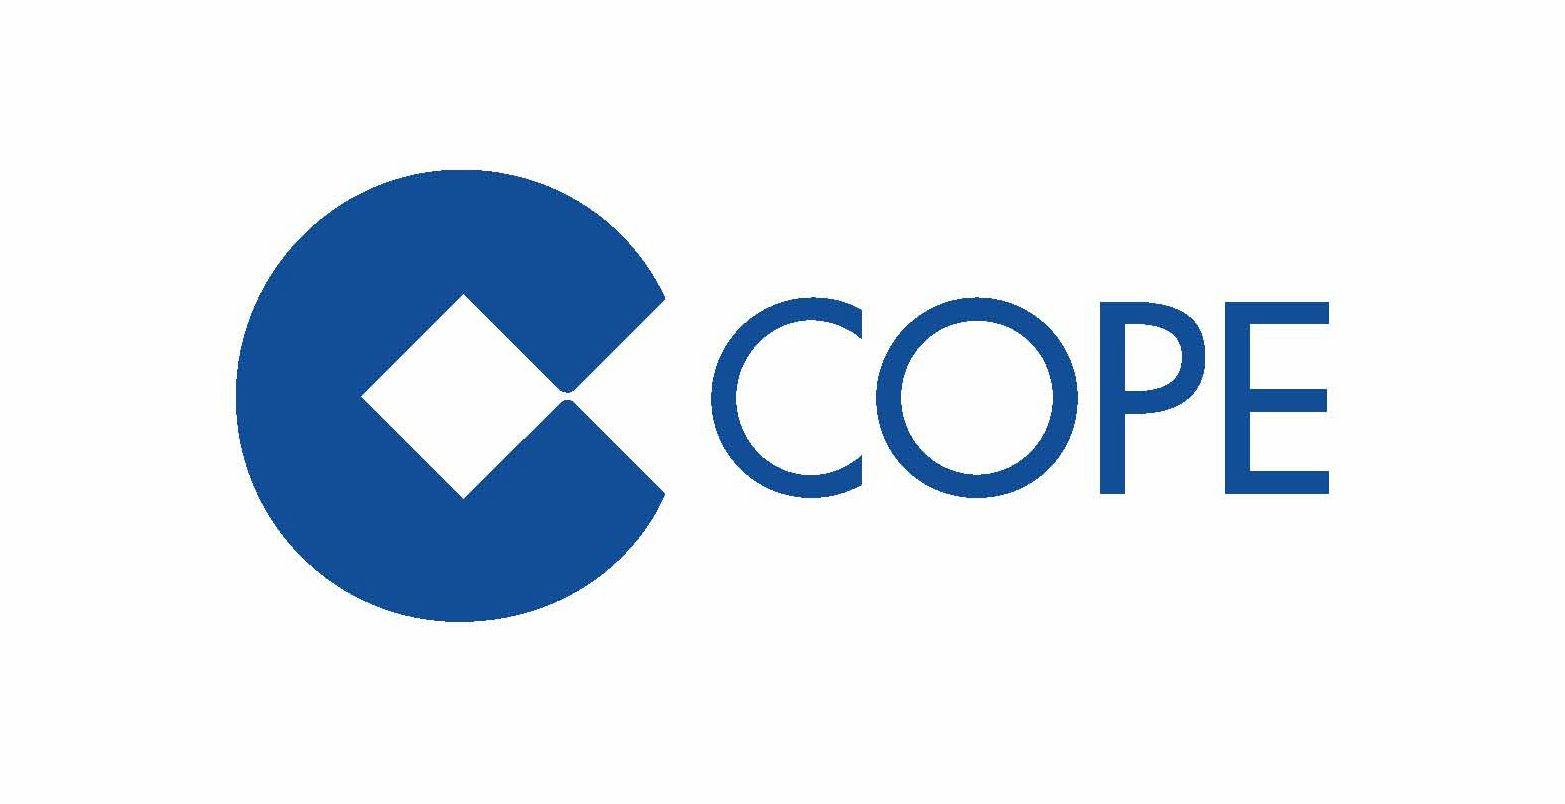 Cope Logo - COPE editorial alliance with ABC | Vocento.eng.com